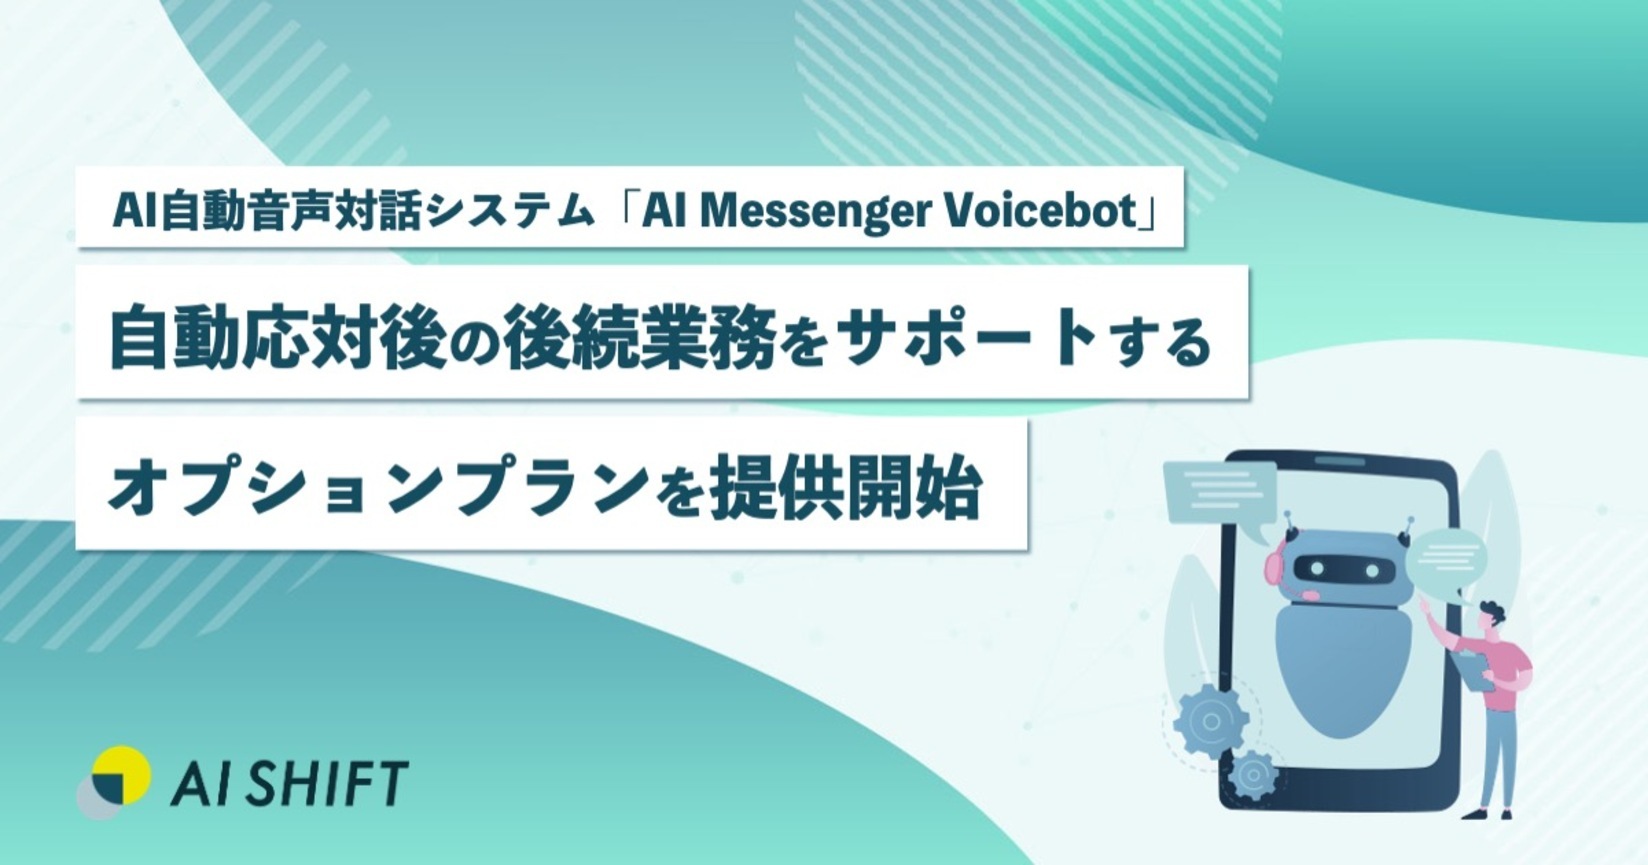 AI自動音声対話システム「AI Messenger Voicebot」にて、自動応対後の後続業務をサポートするオプションプランを提供開始 ~ヒアリング後のデータチェックやAPI等を活用したデータ連携を支援~